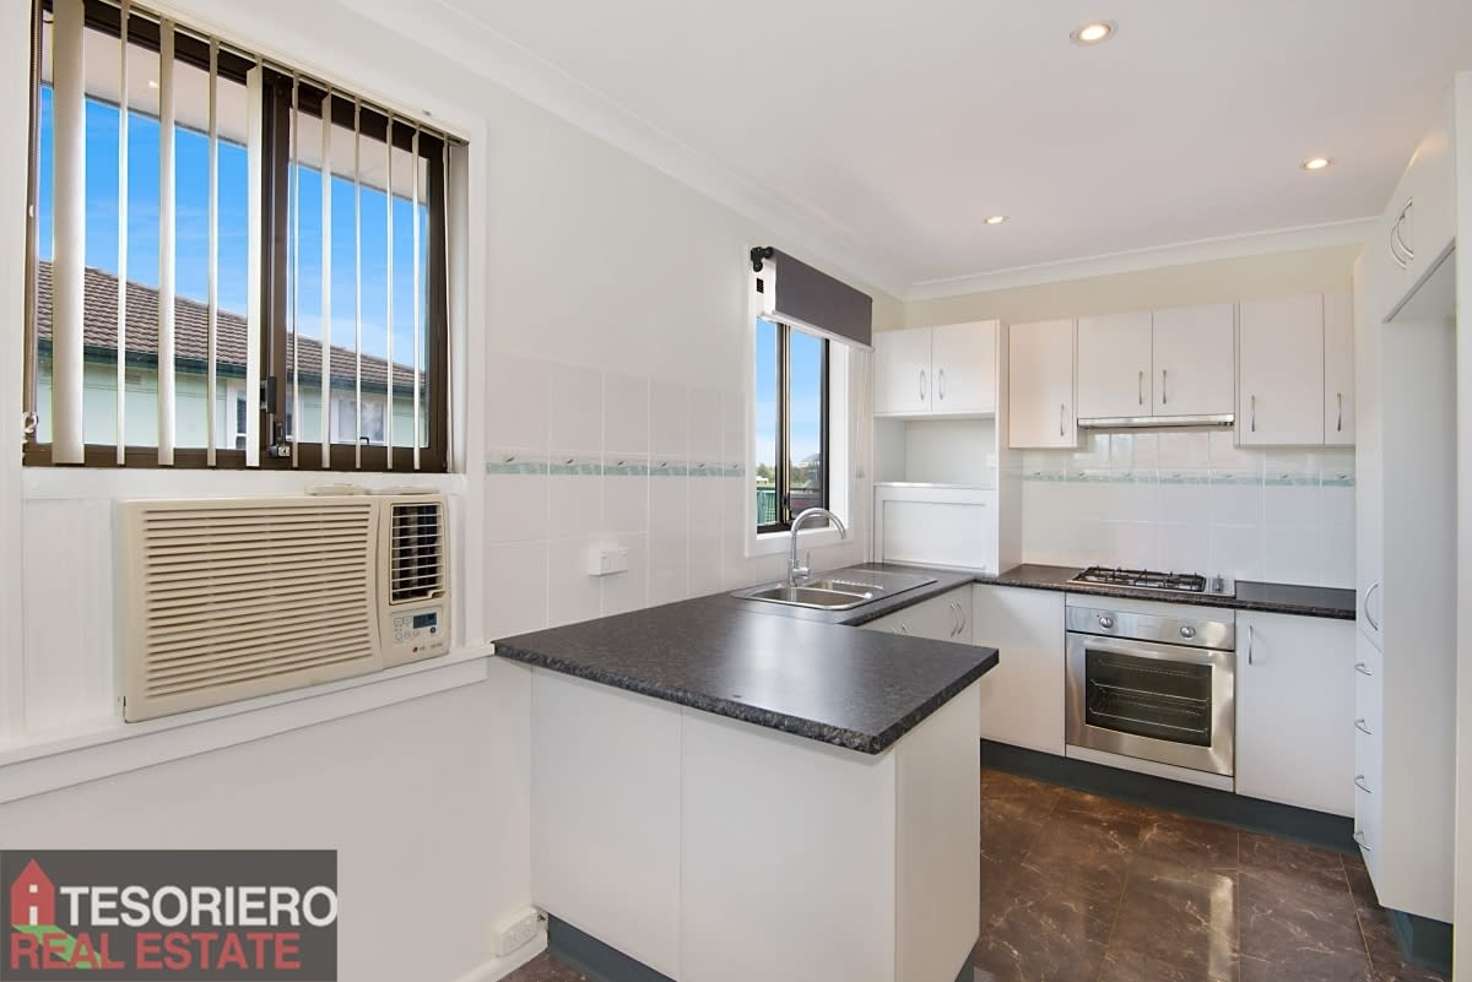 Main view of Homely house listing, 38 Goroka St, Whalan NSW 2770